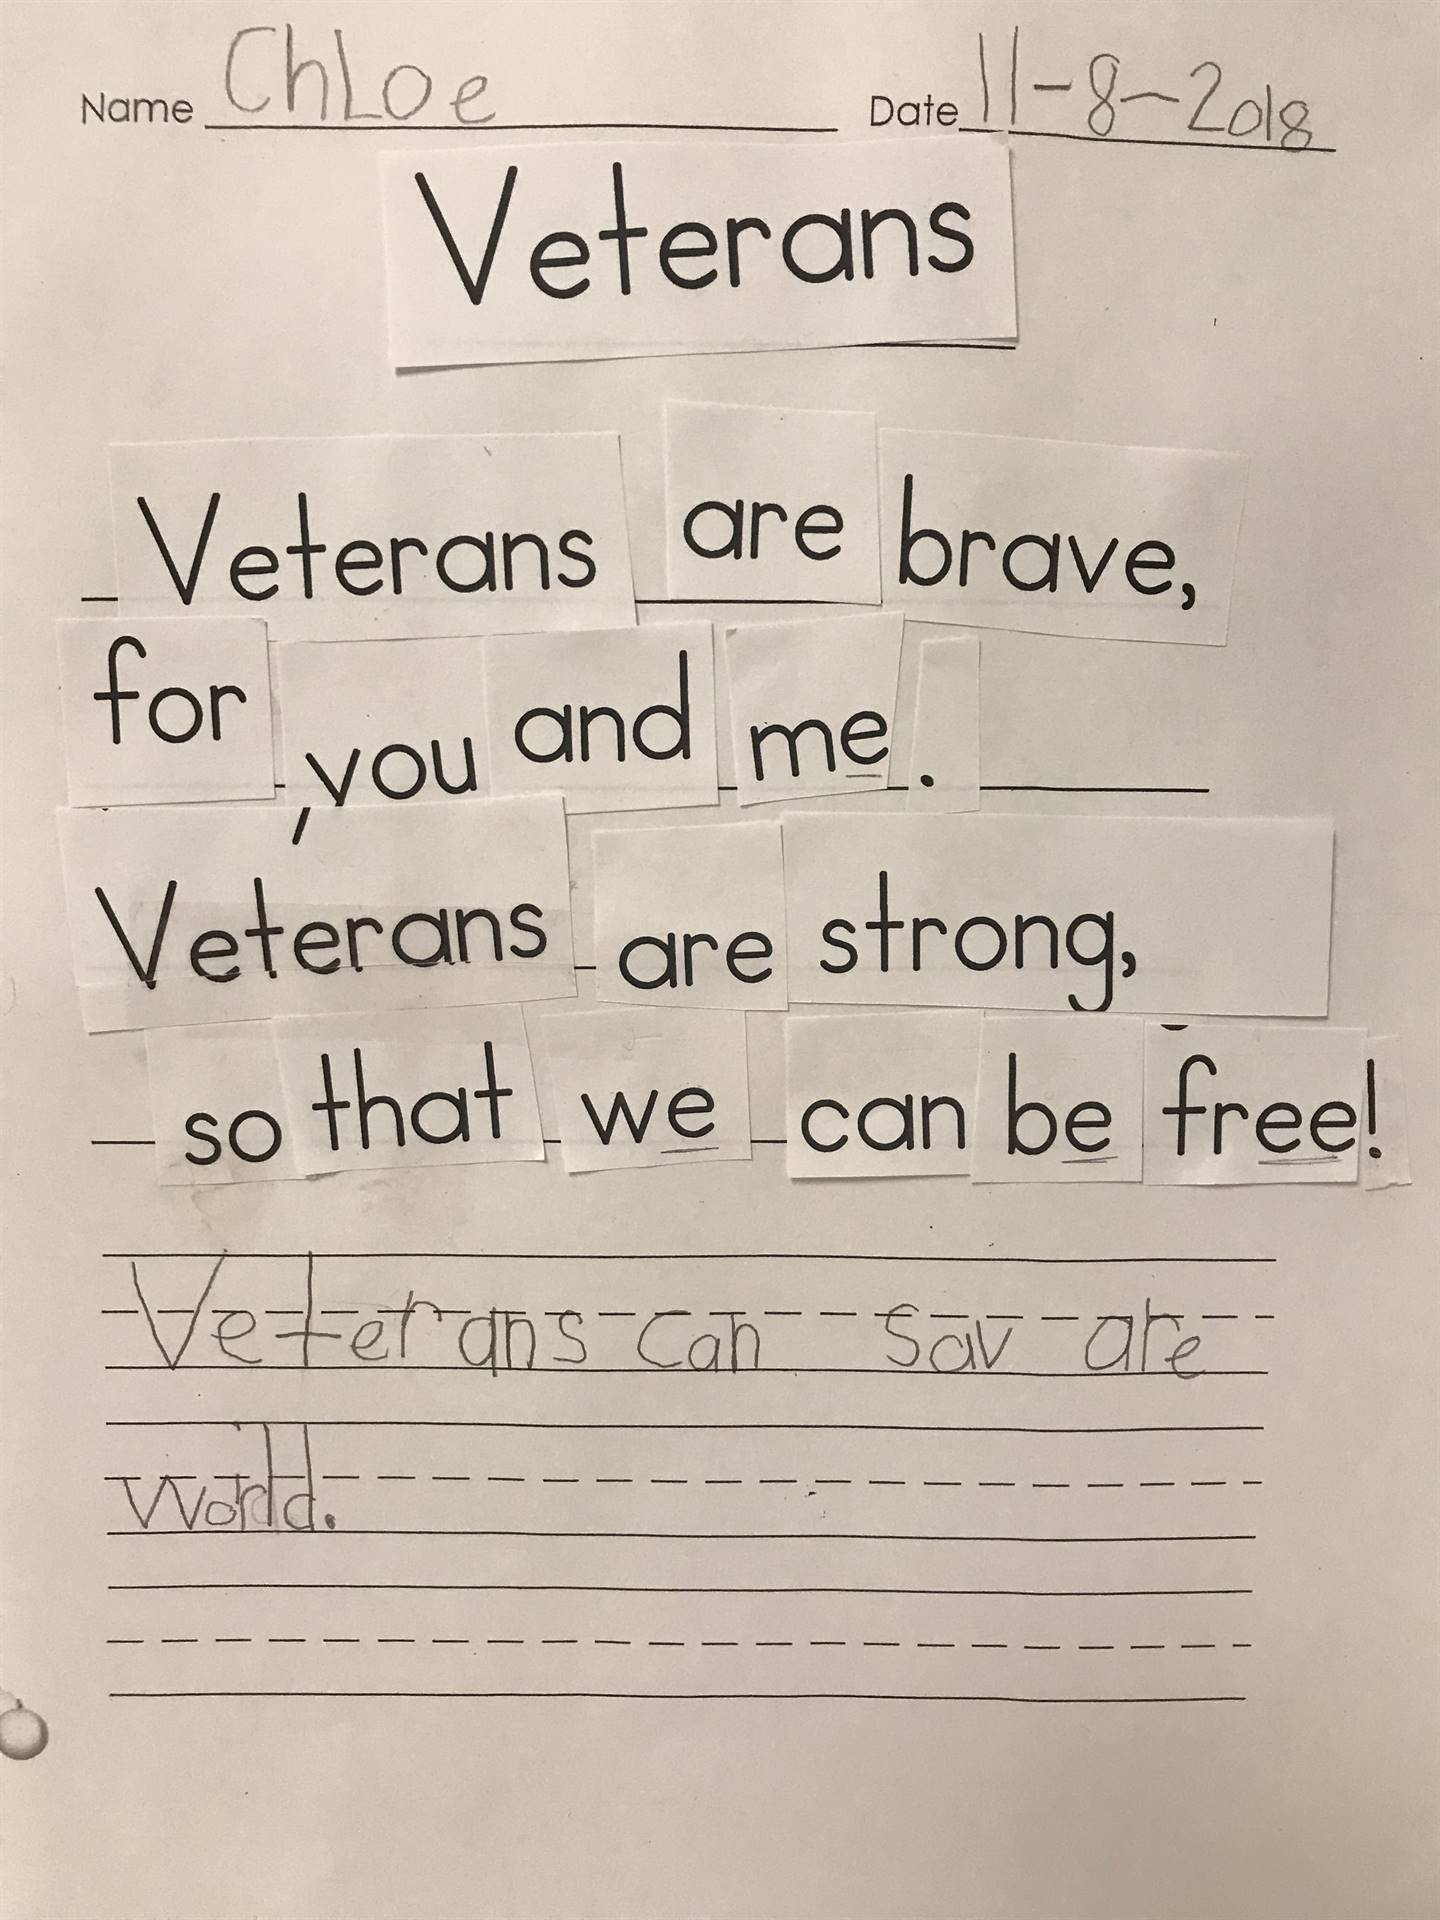 Veterans Day writings